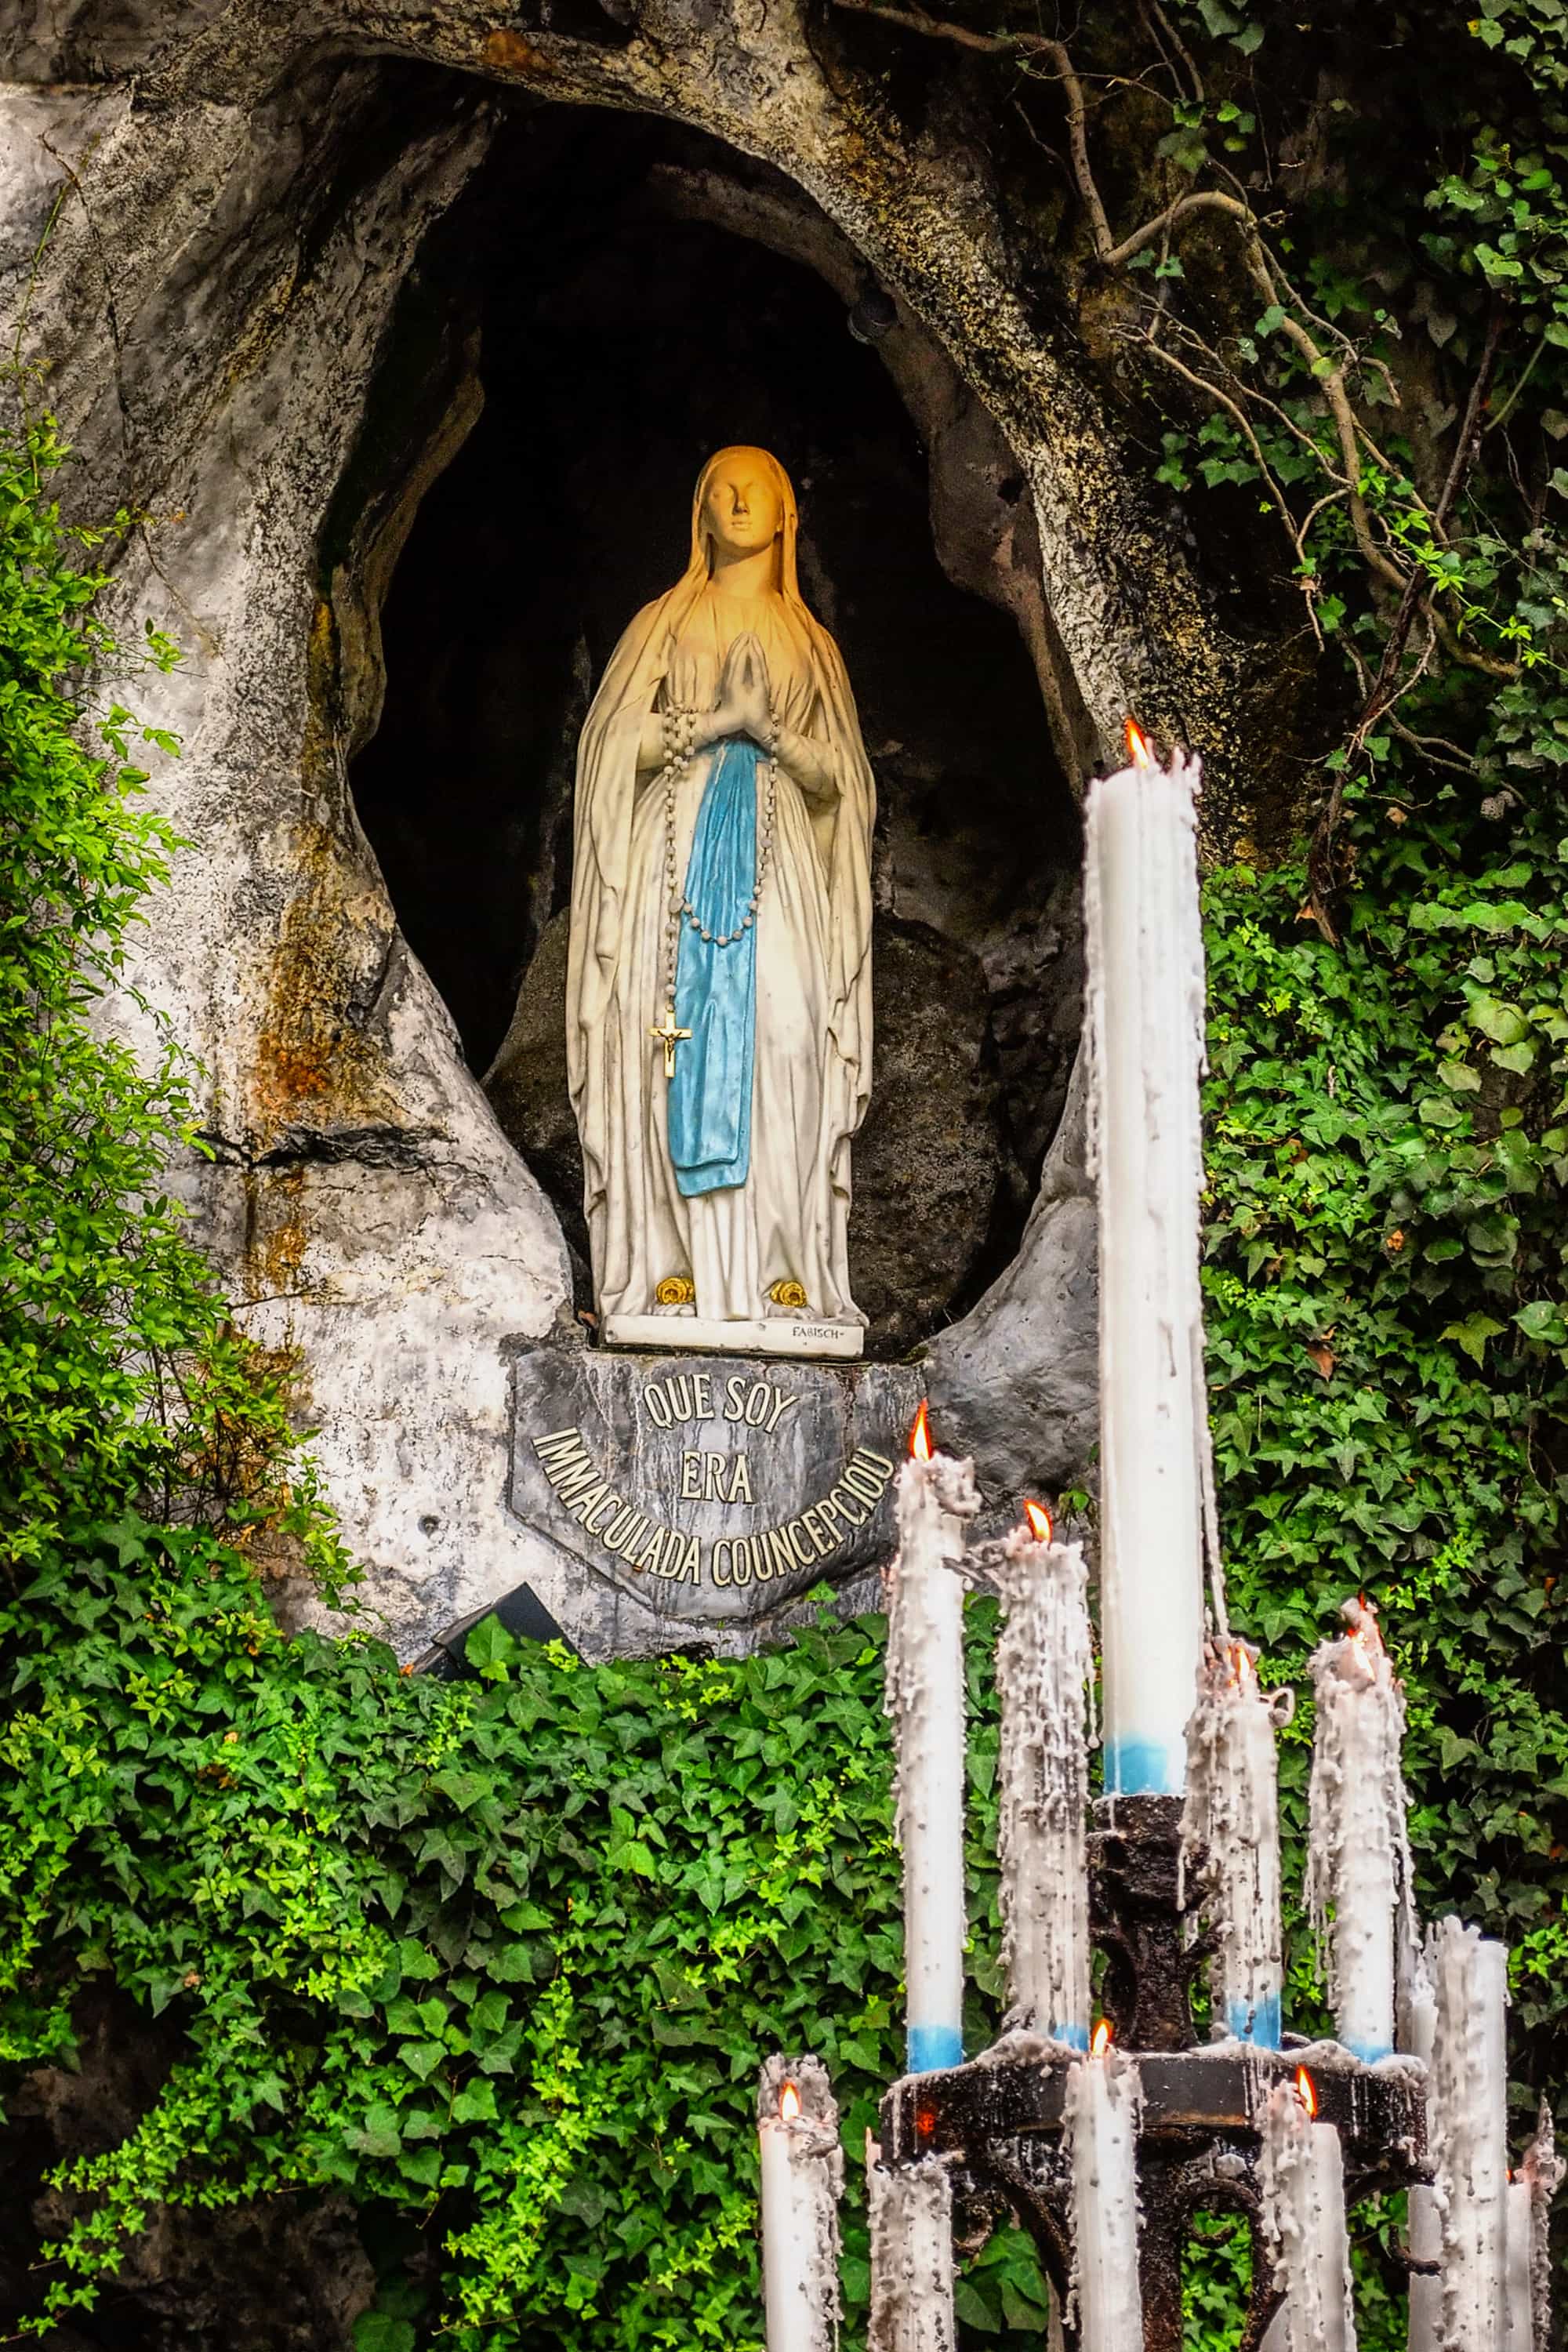 Best Lady Of Lourdes Catholic Religious Wallpaper On